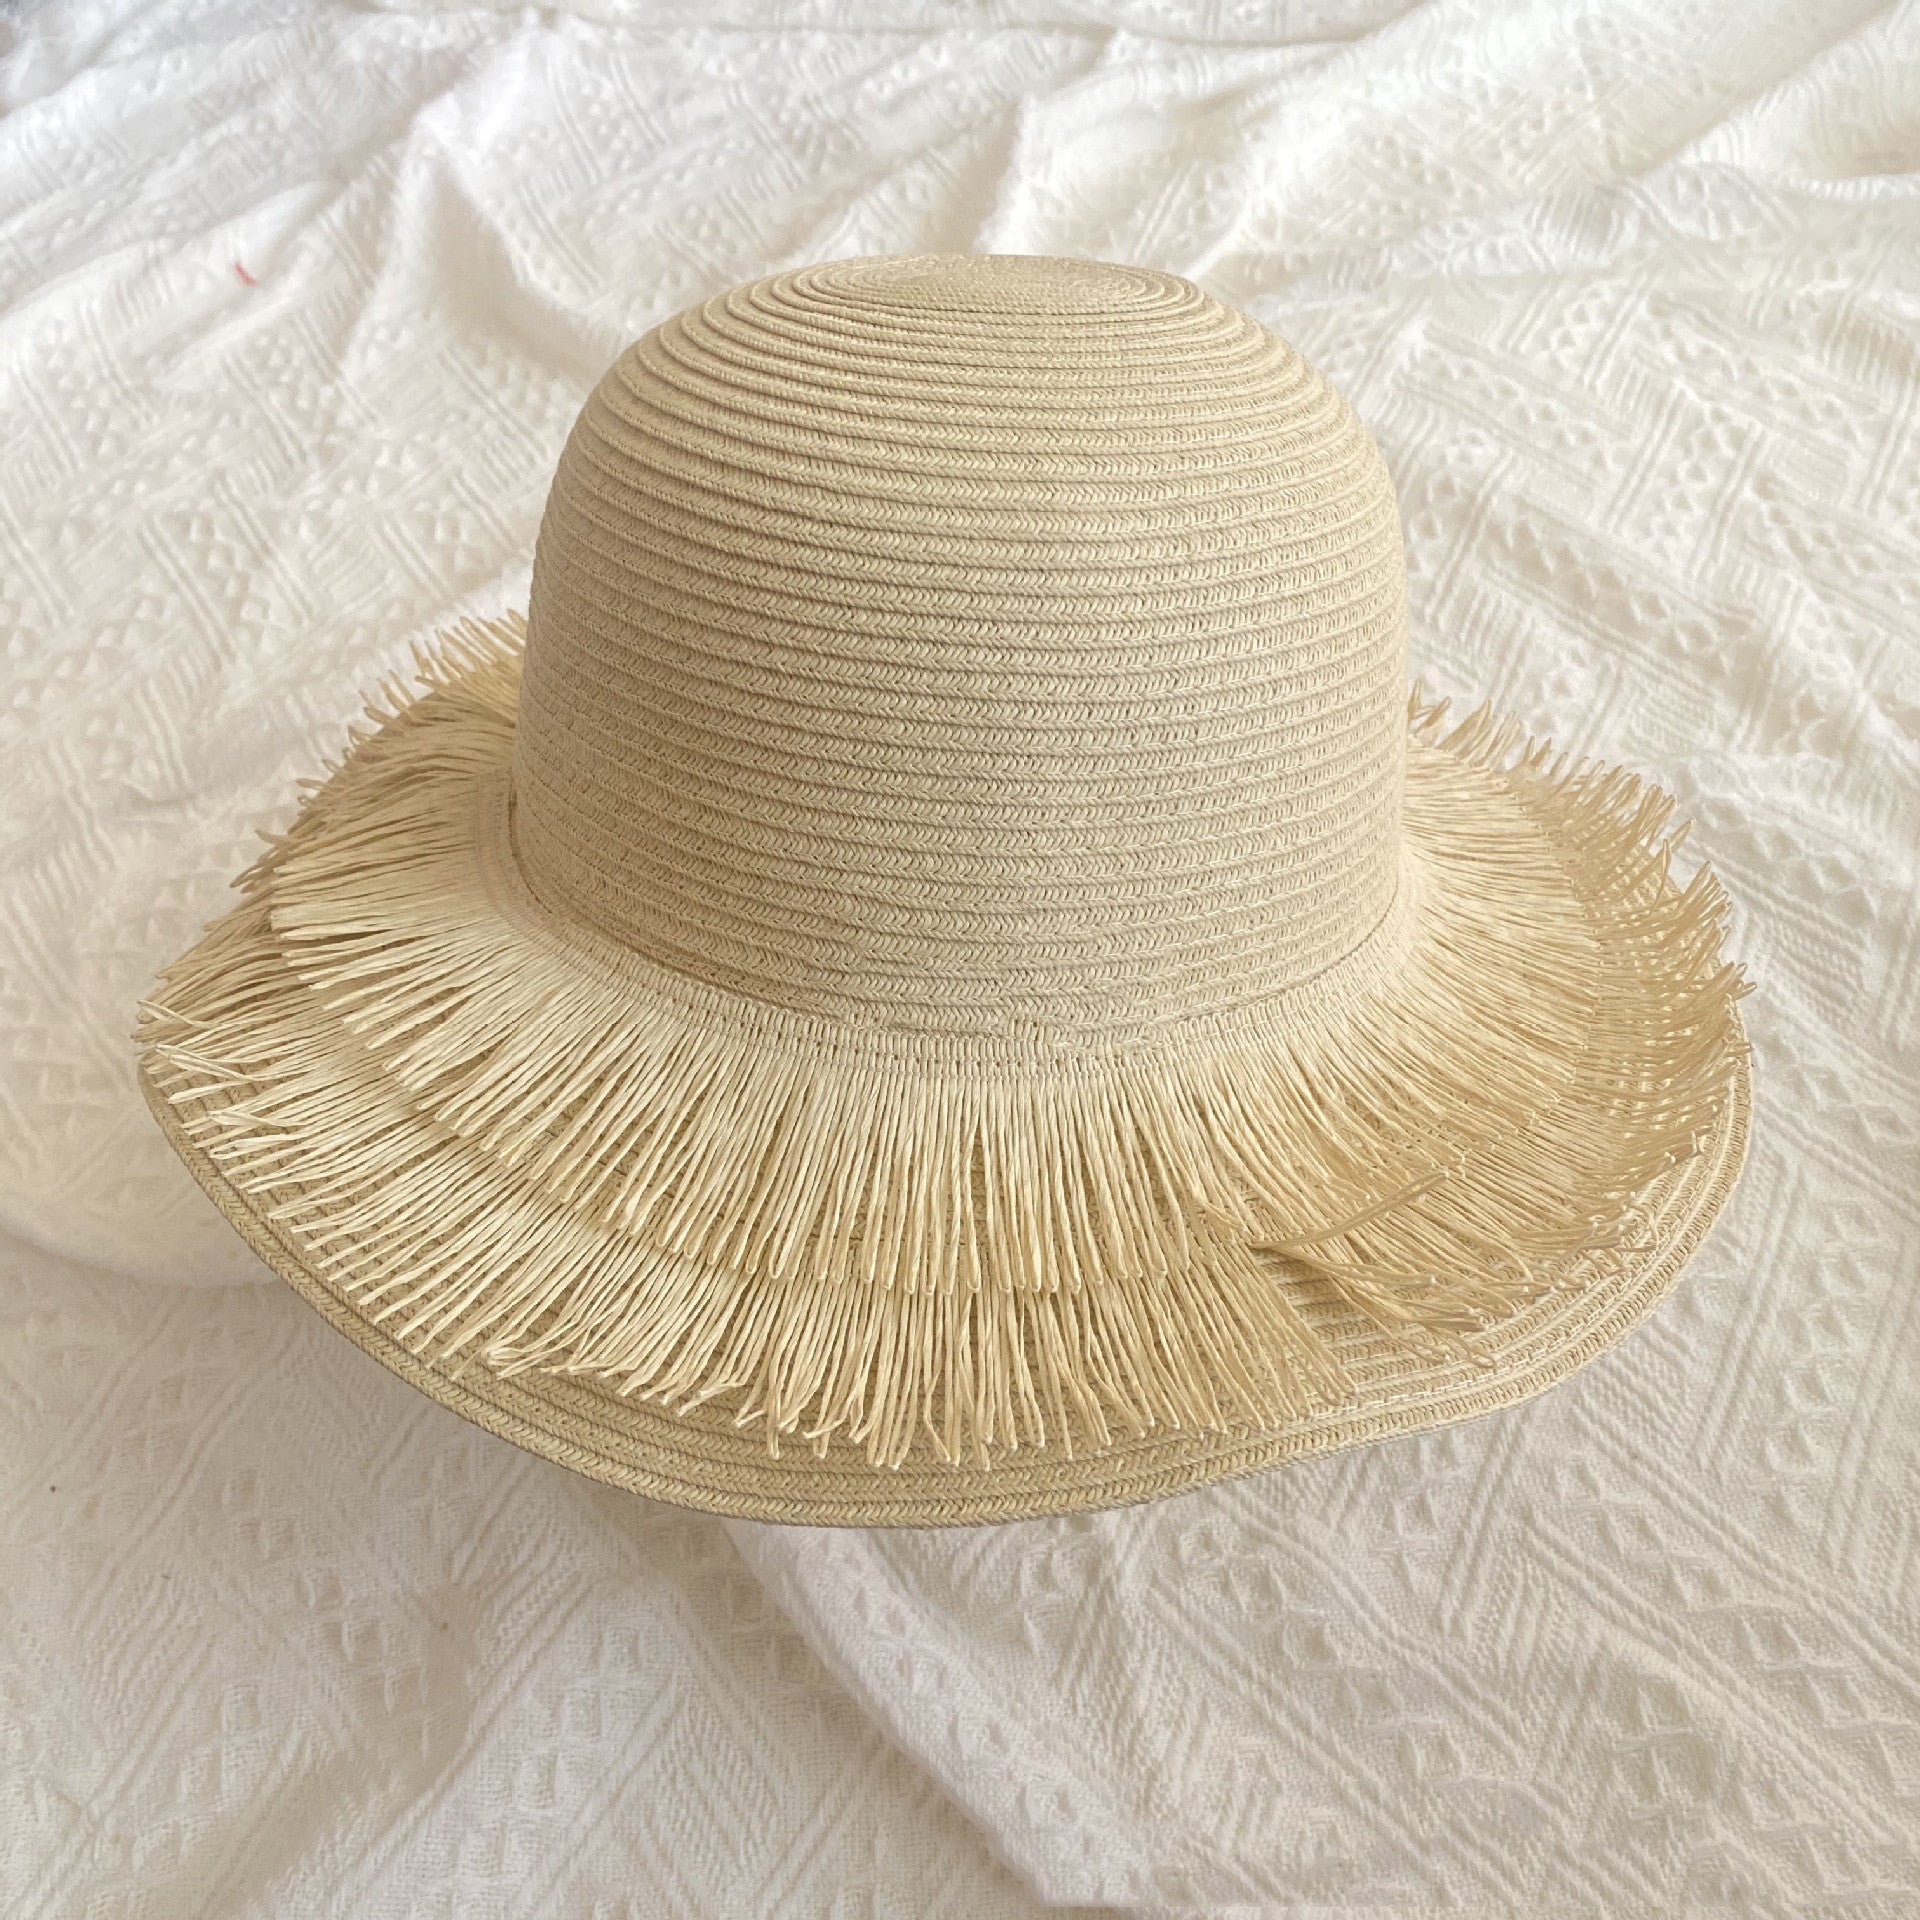 HOOR Sunshade Straw Hat